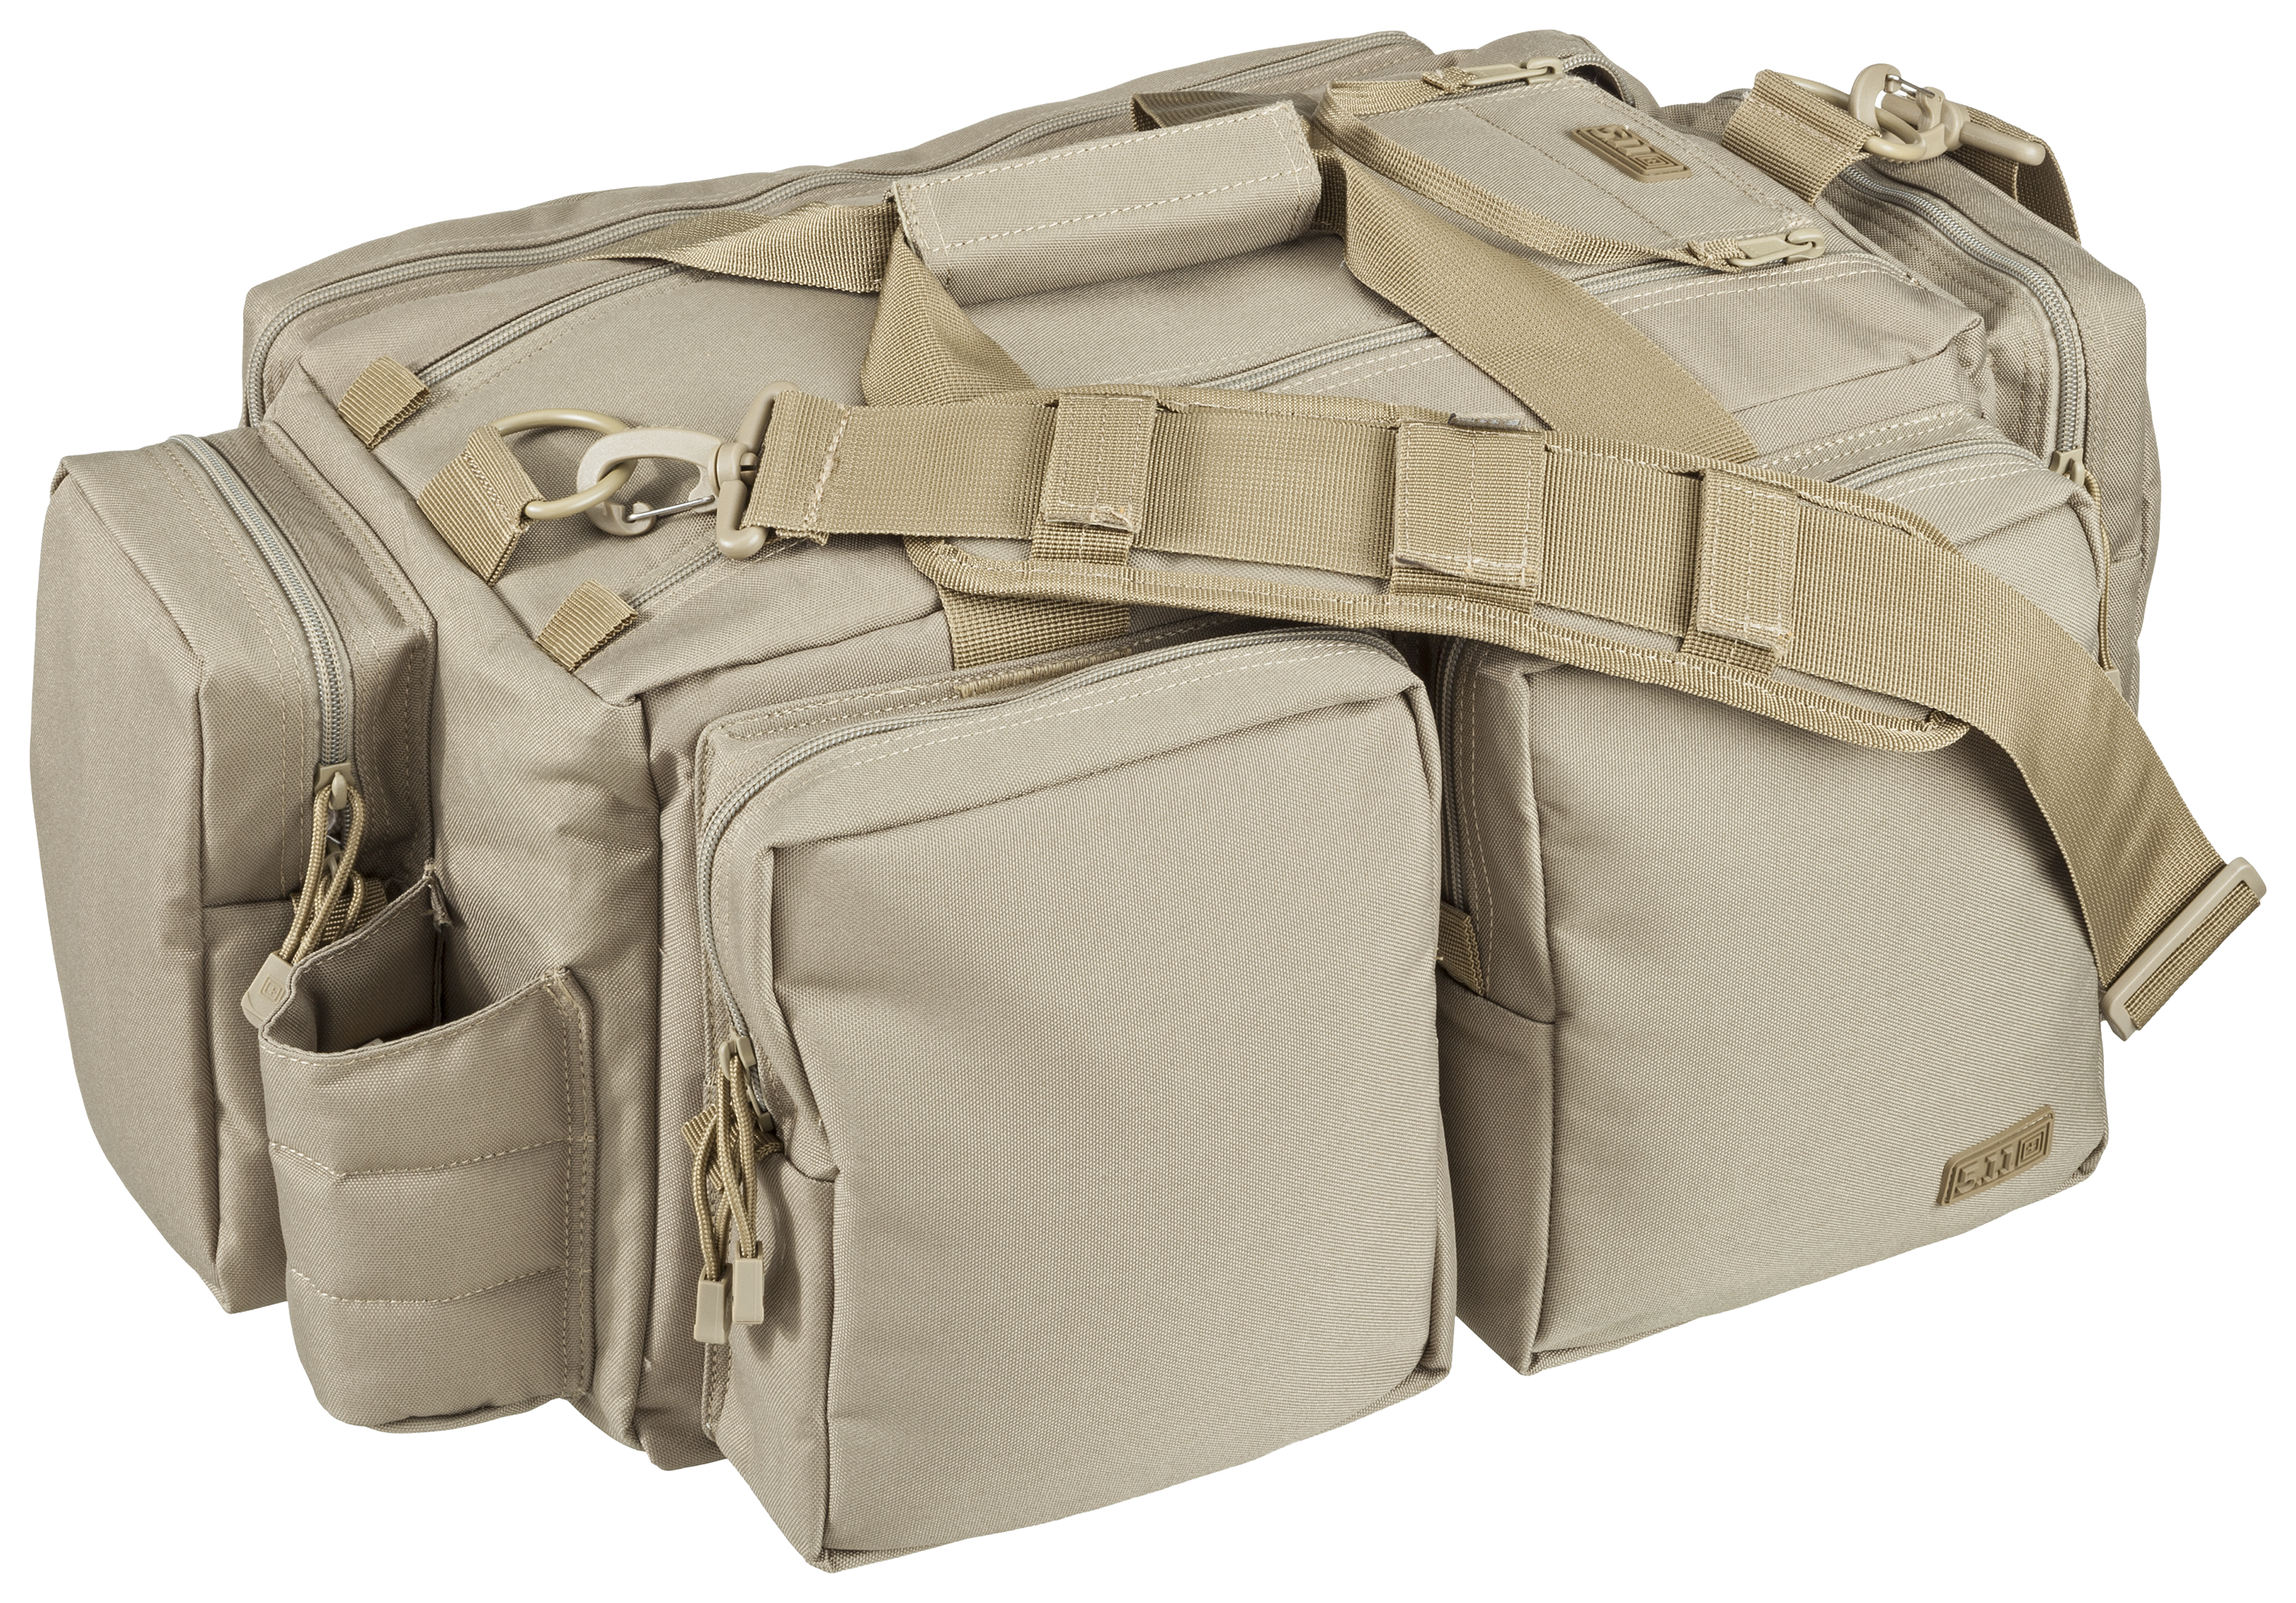 5.11 Tactical Range Ready Bag